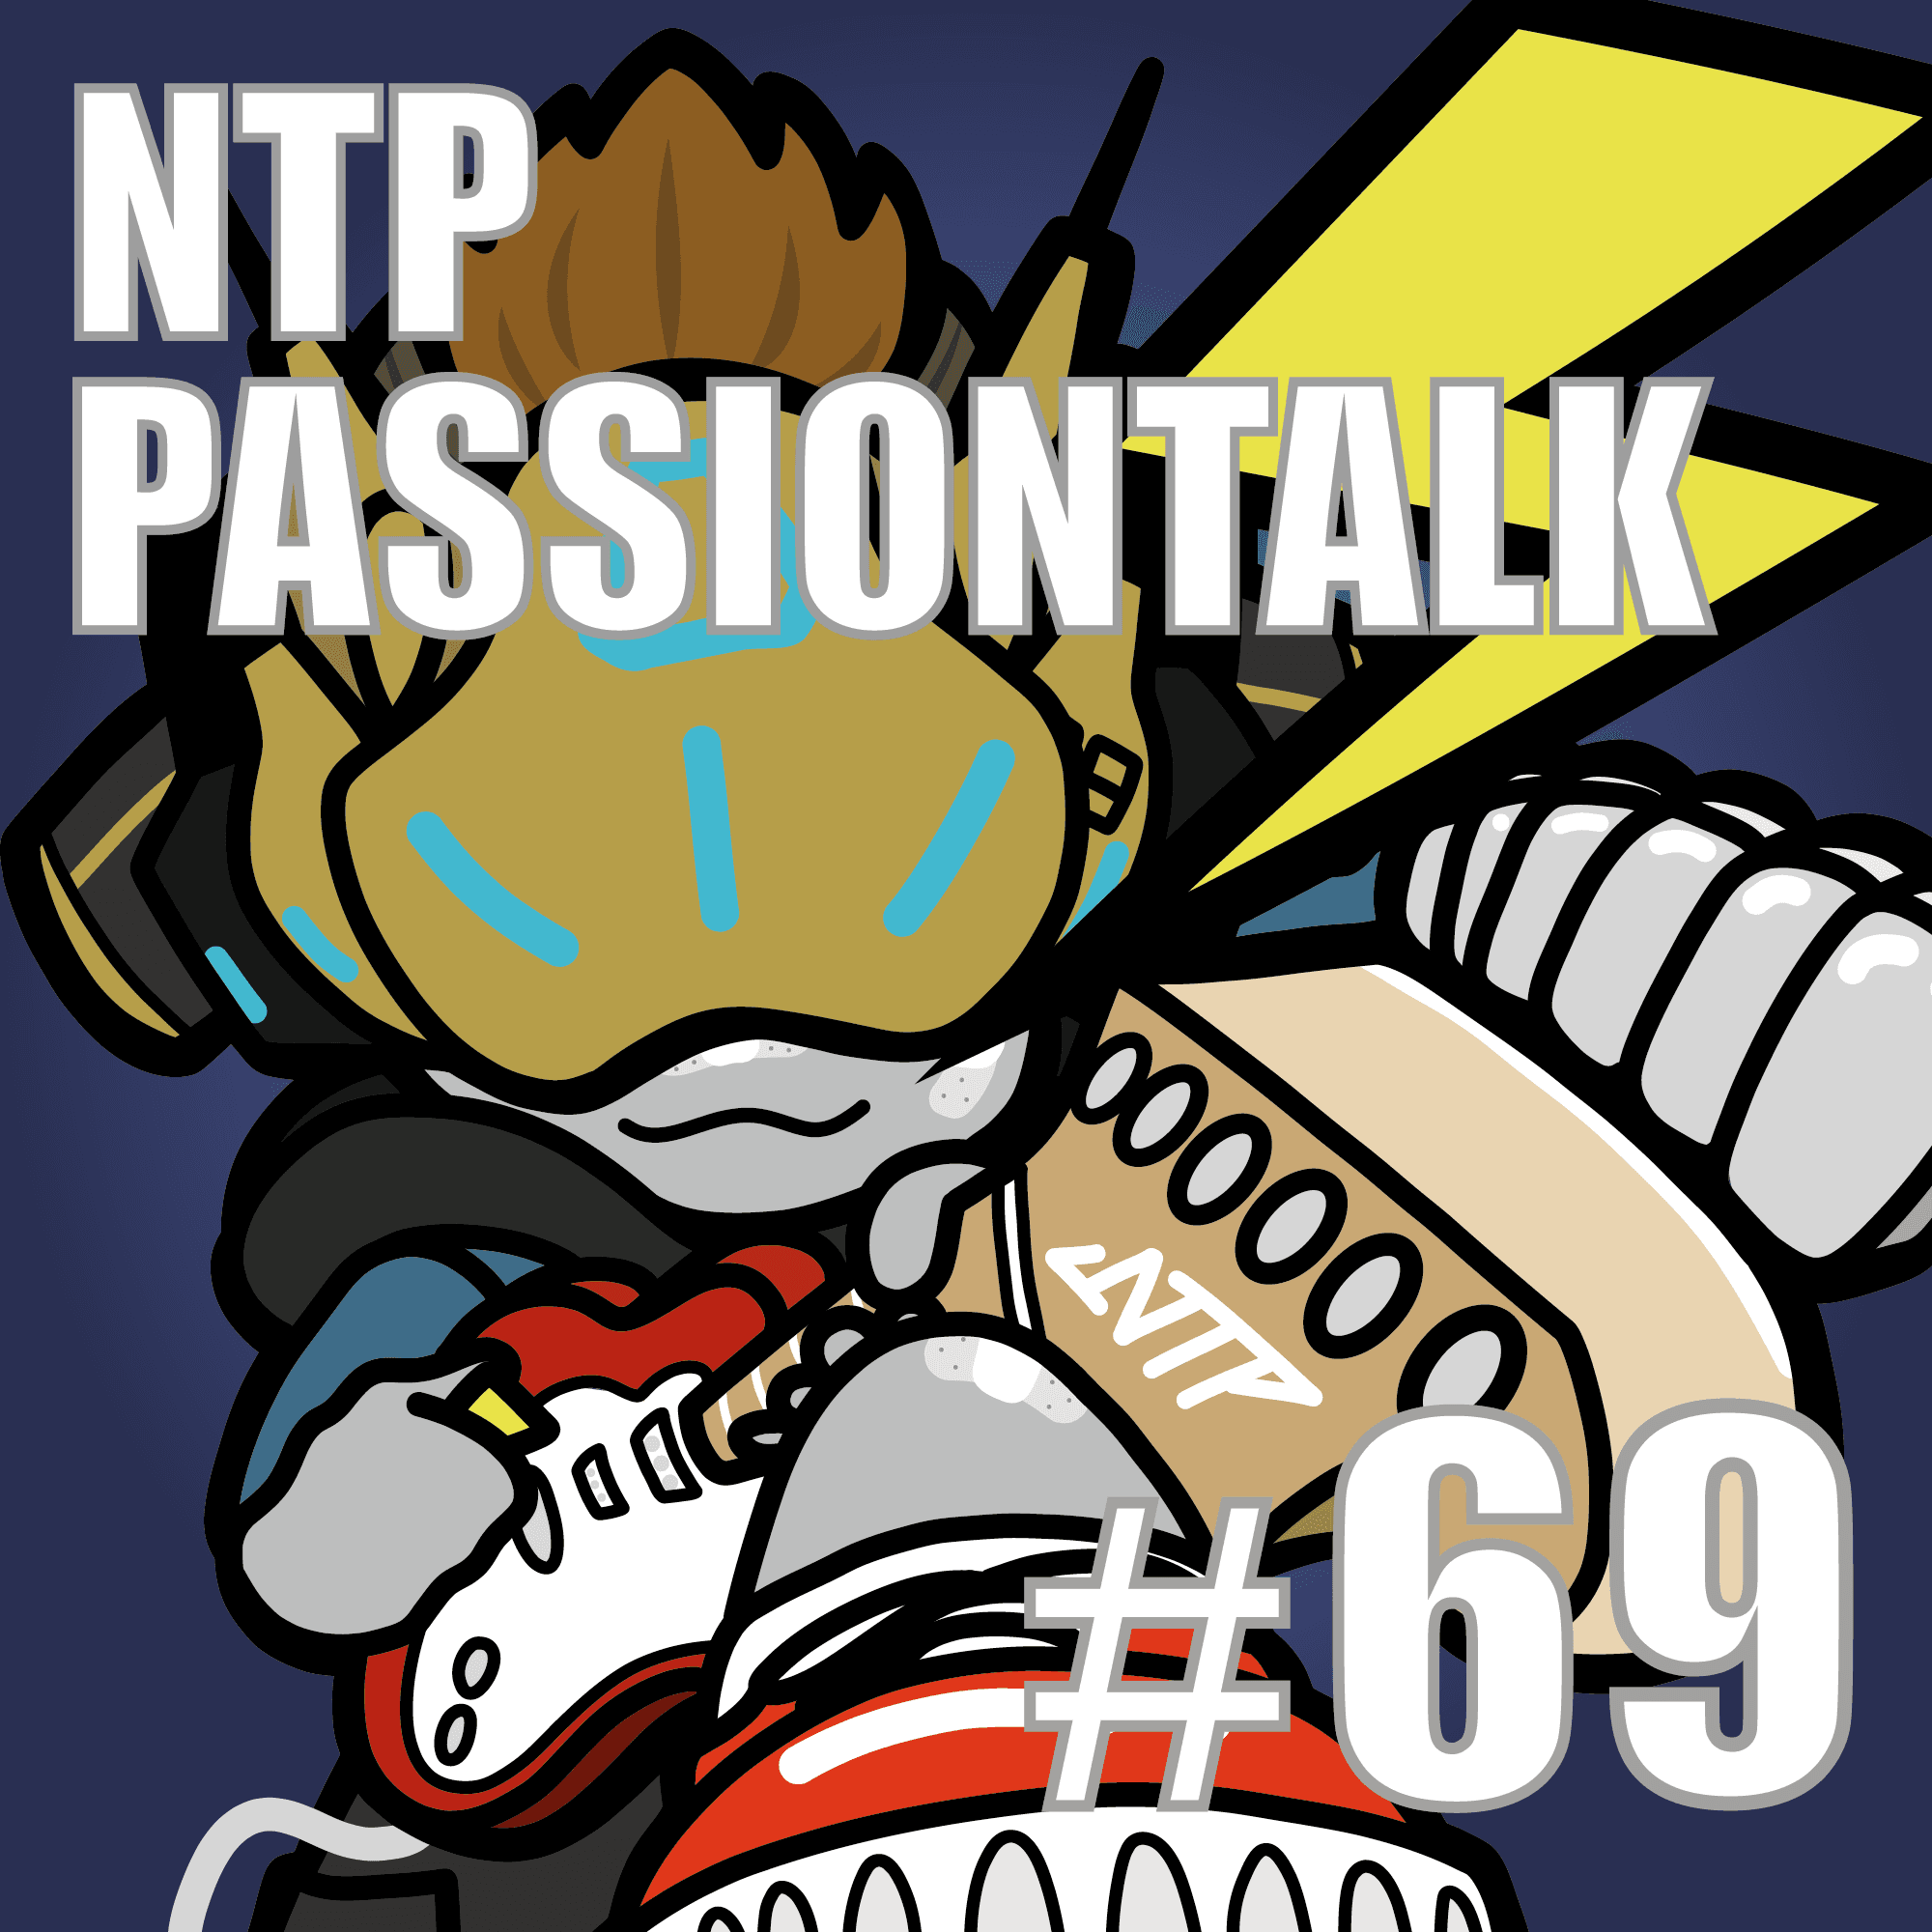 NTP PASSIONTALK #69 SBT